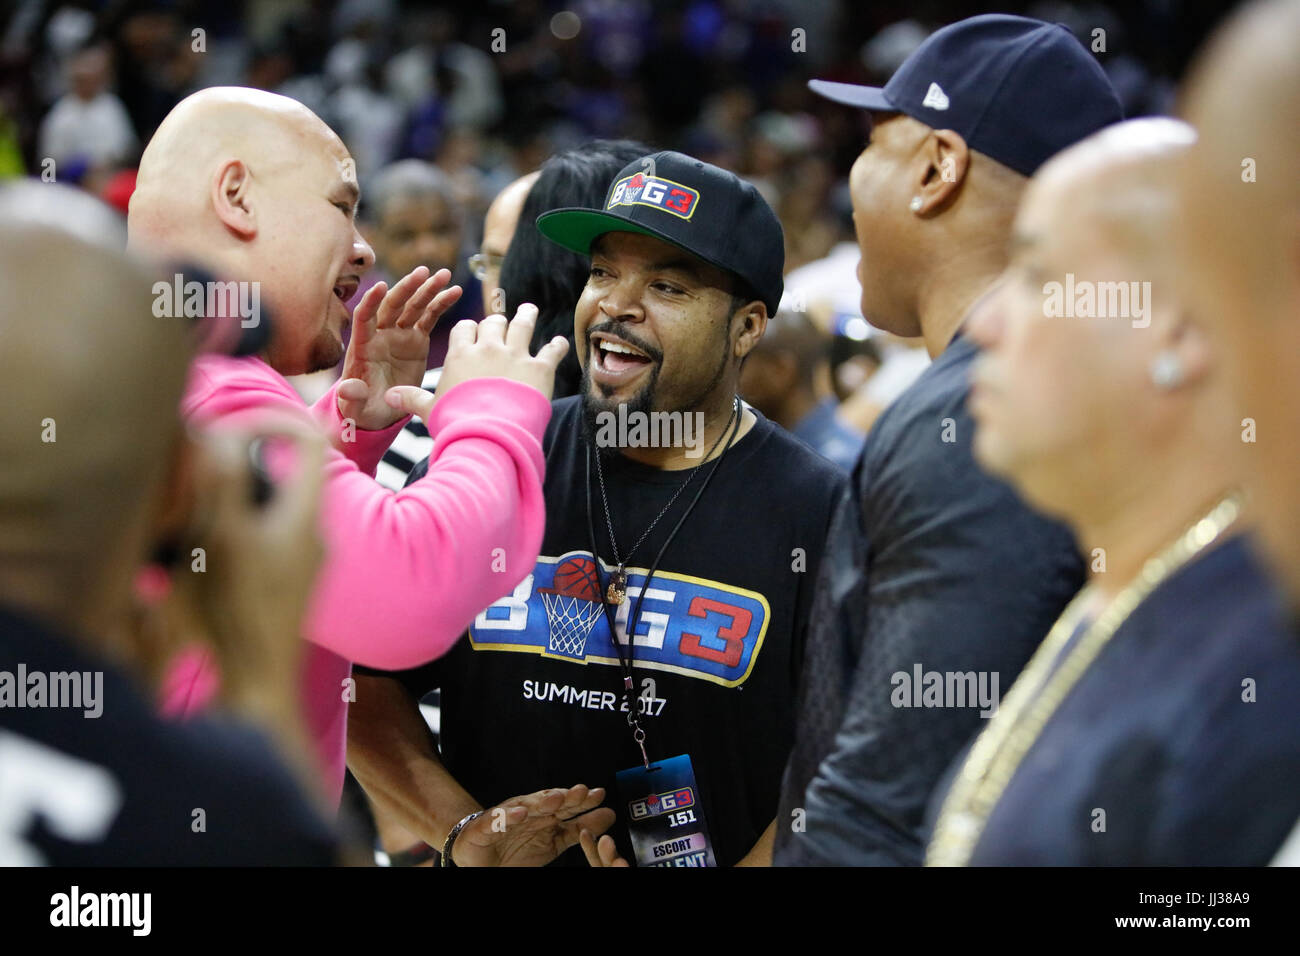 Fat Joe Ice Cube attend Big 3 league Phiily,PA 7/16/17 Stock Photo